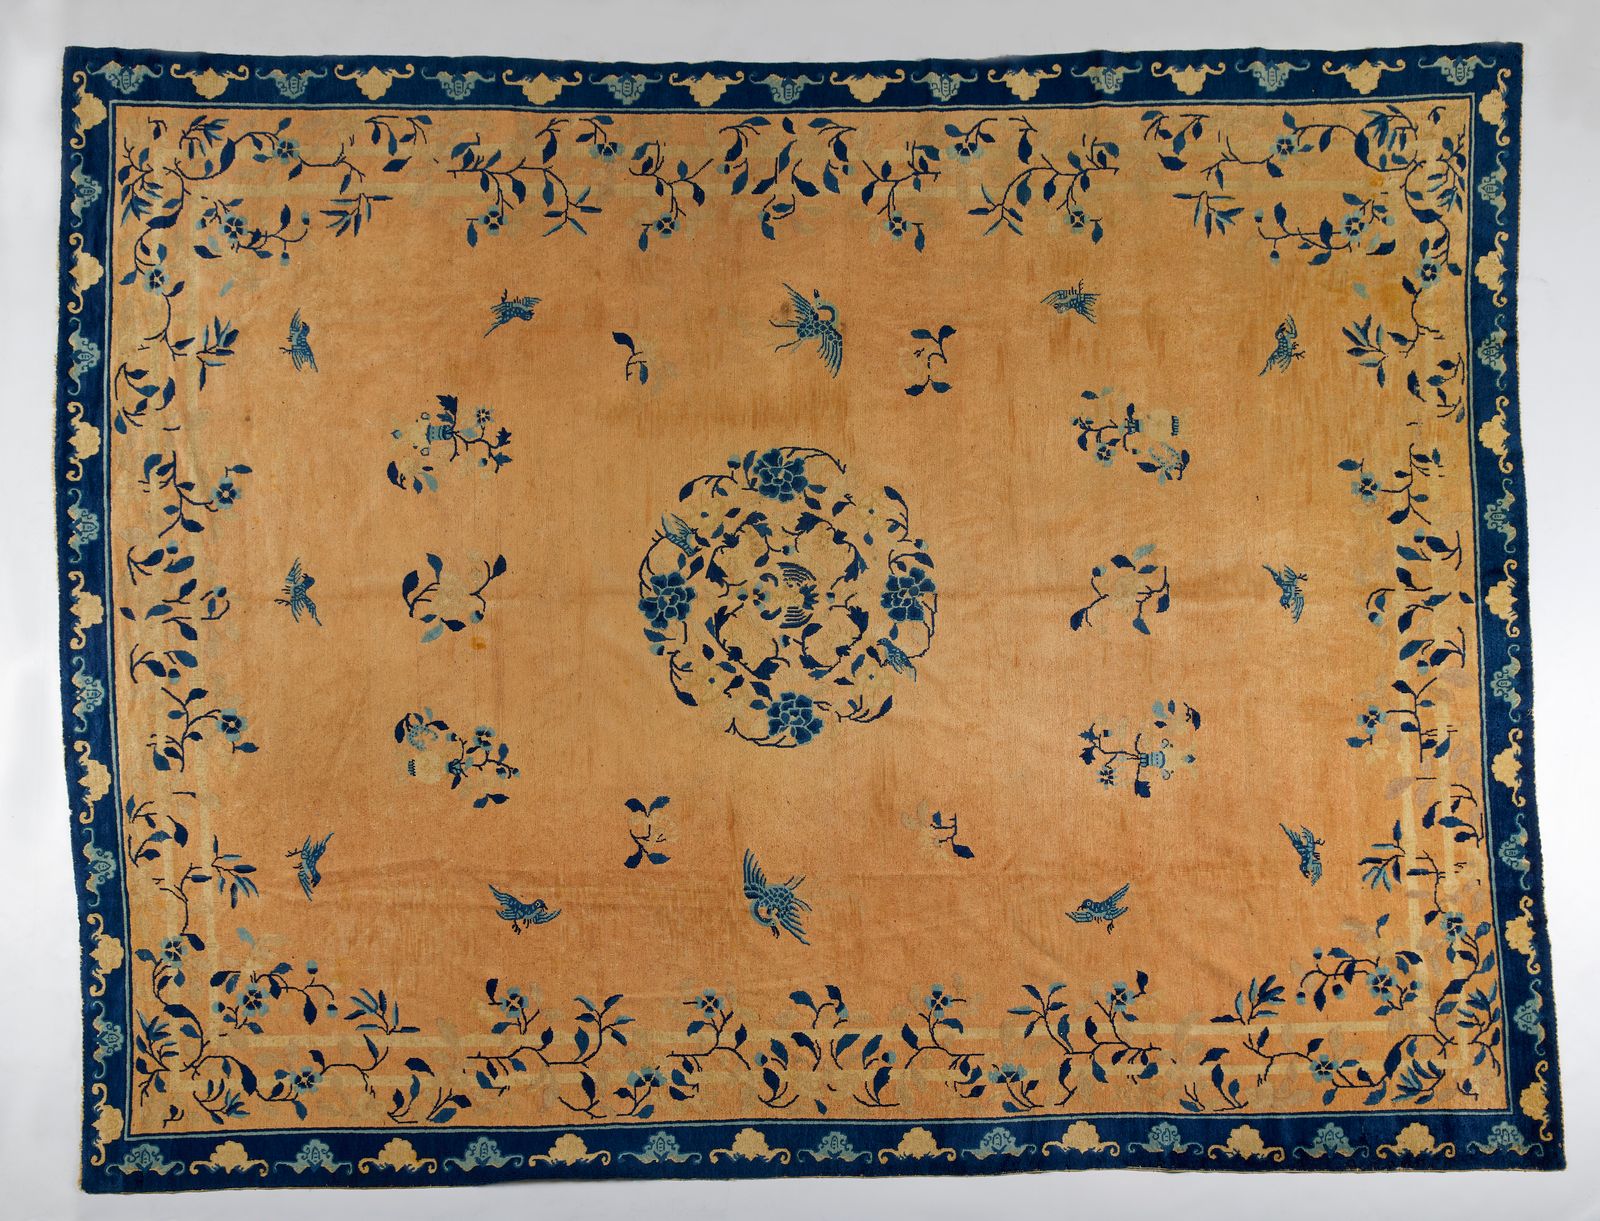 Chinese Art A large Beijing rug 中国艺术。一个大型的北京地毯，中国，19世纪末。一个大型的米色地面地毯，装饰着蓝色花朵中的鸟儿，&hellip;